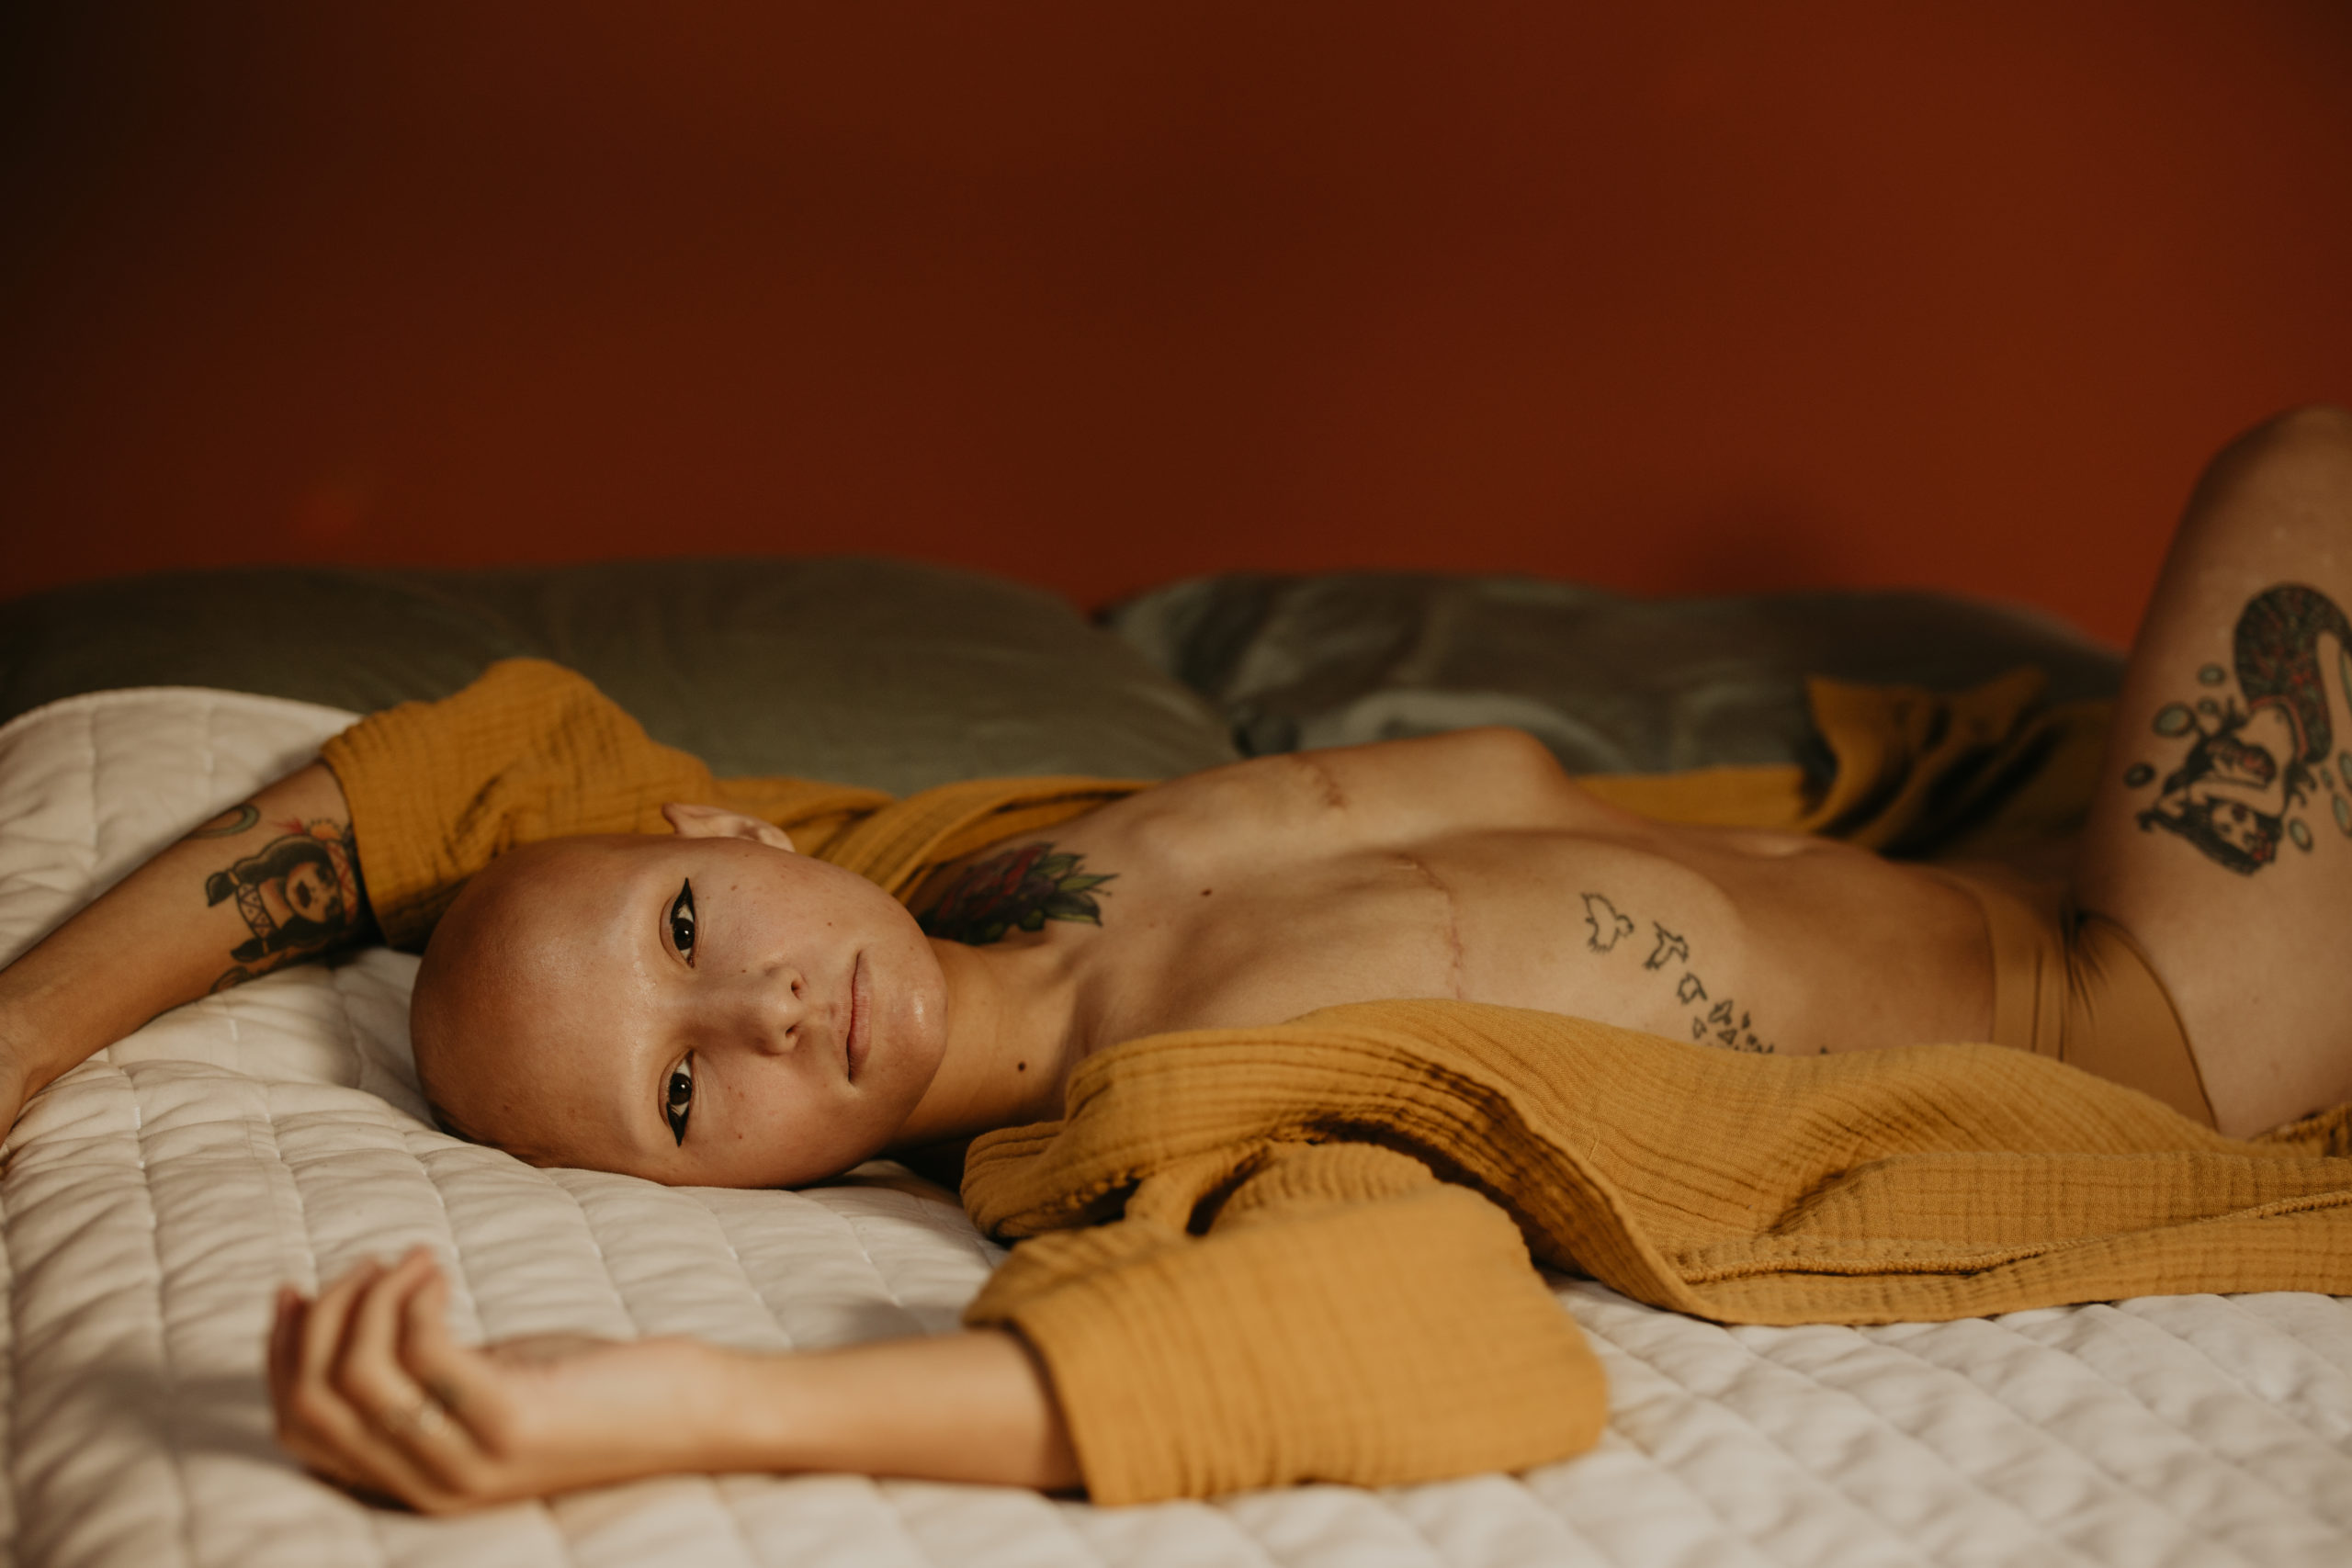 Double mastectomy boudoir photoshoot